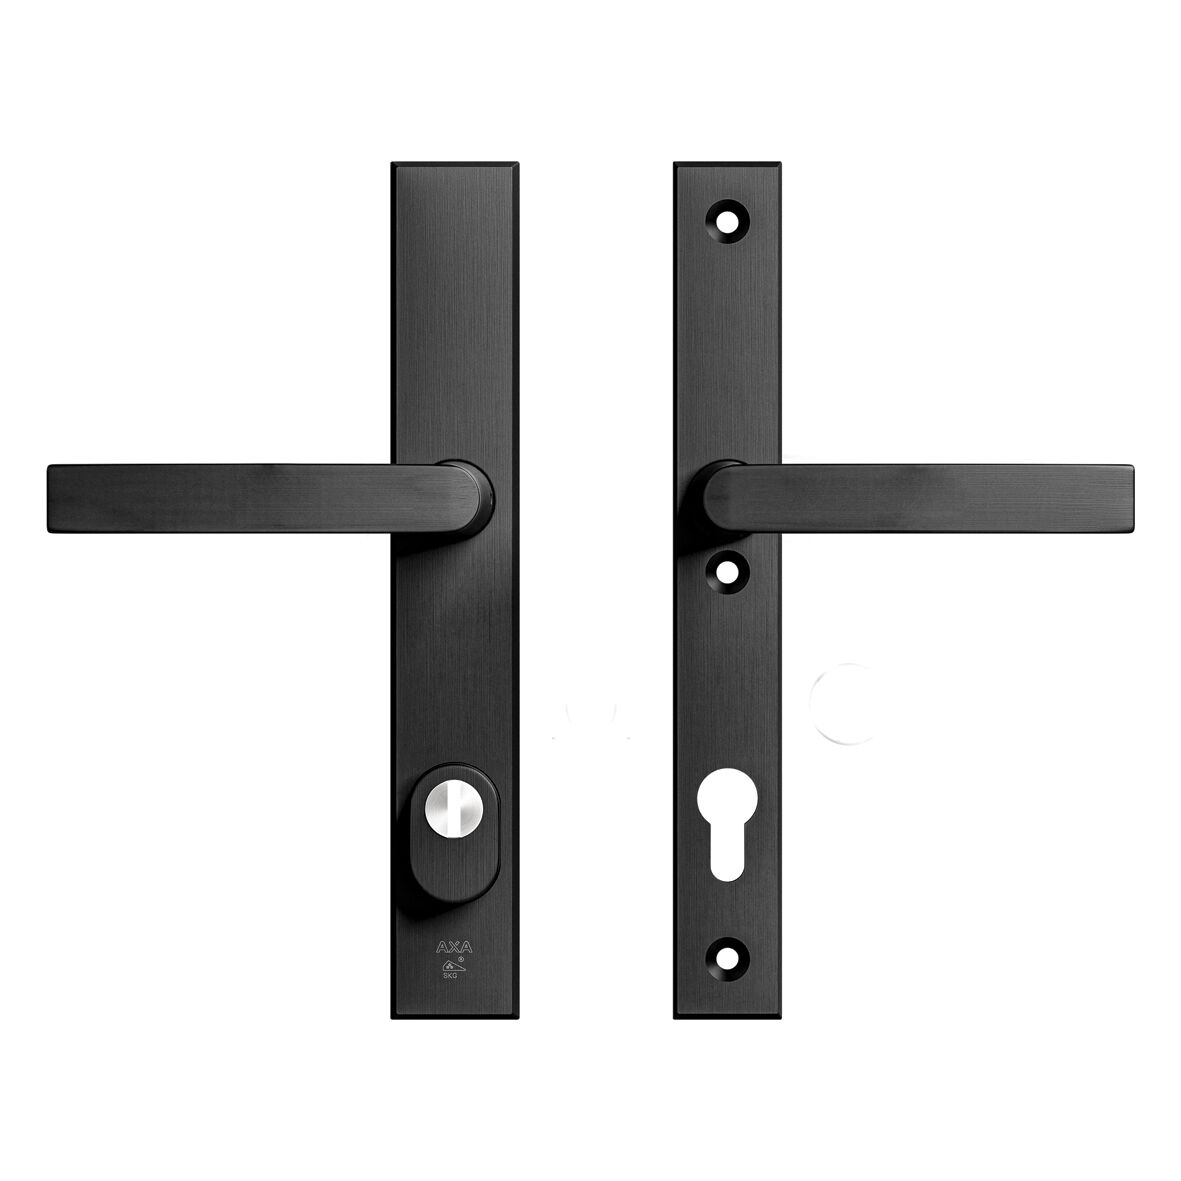 AXA Security fitting edge plus, security fitting edge plus narrow handle block PC92 anti-core pull black